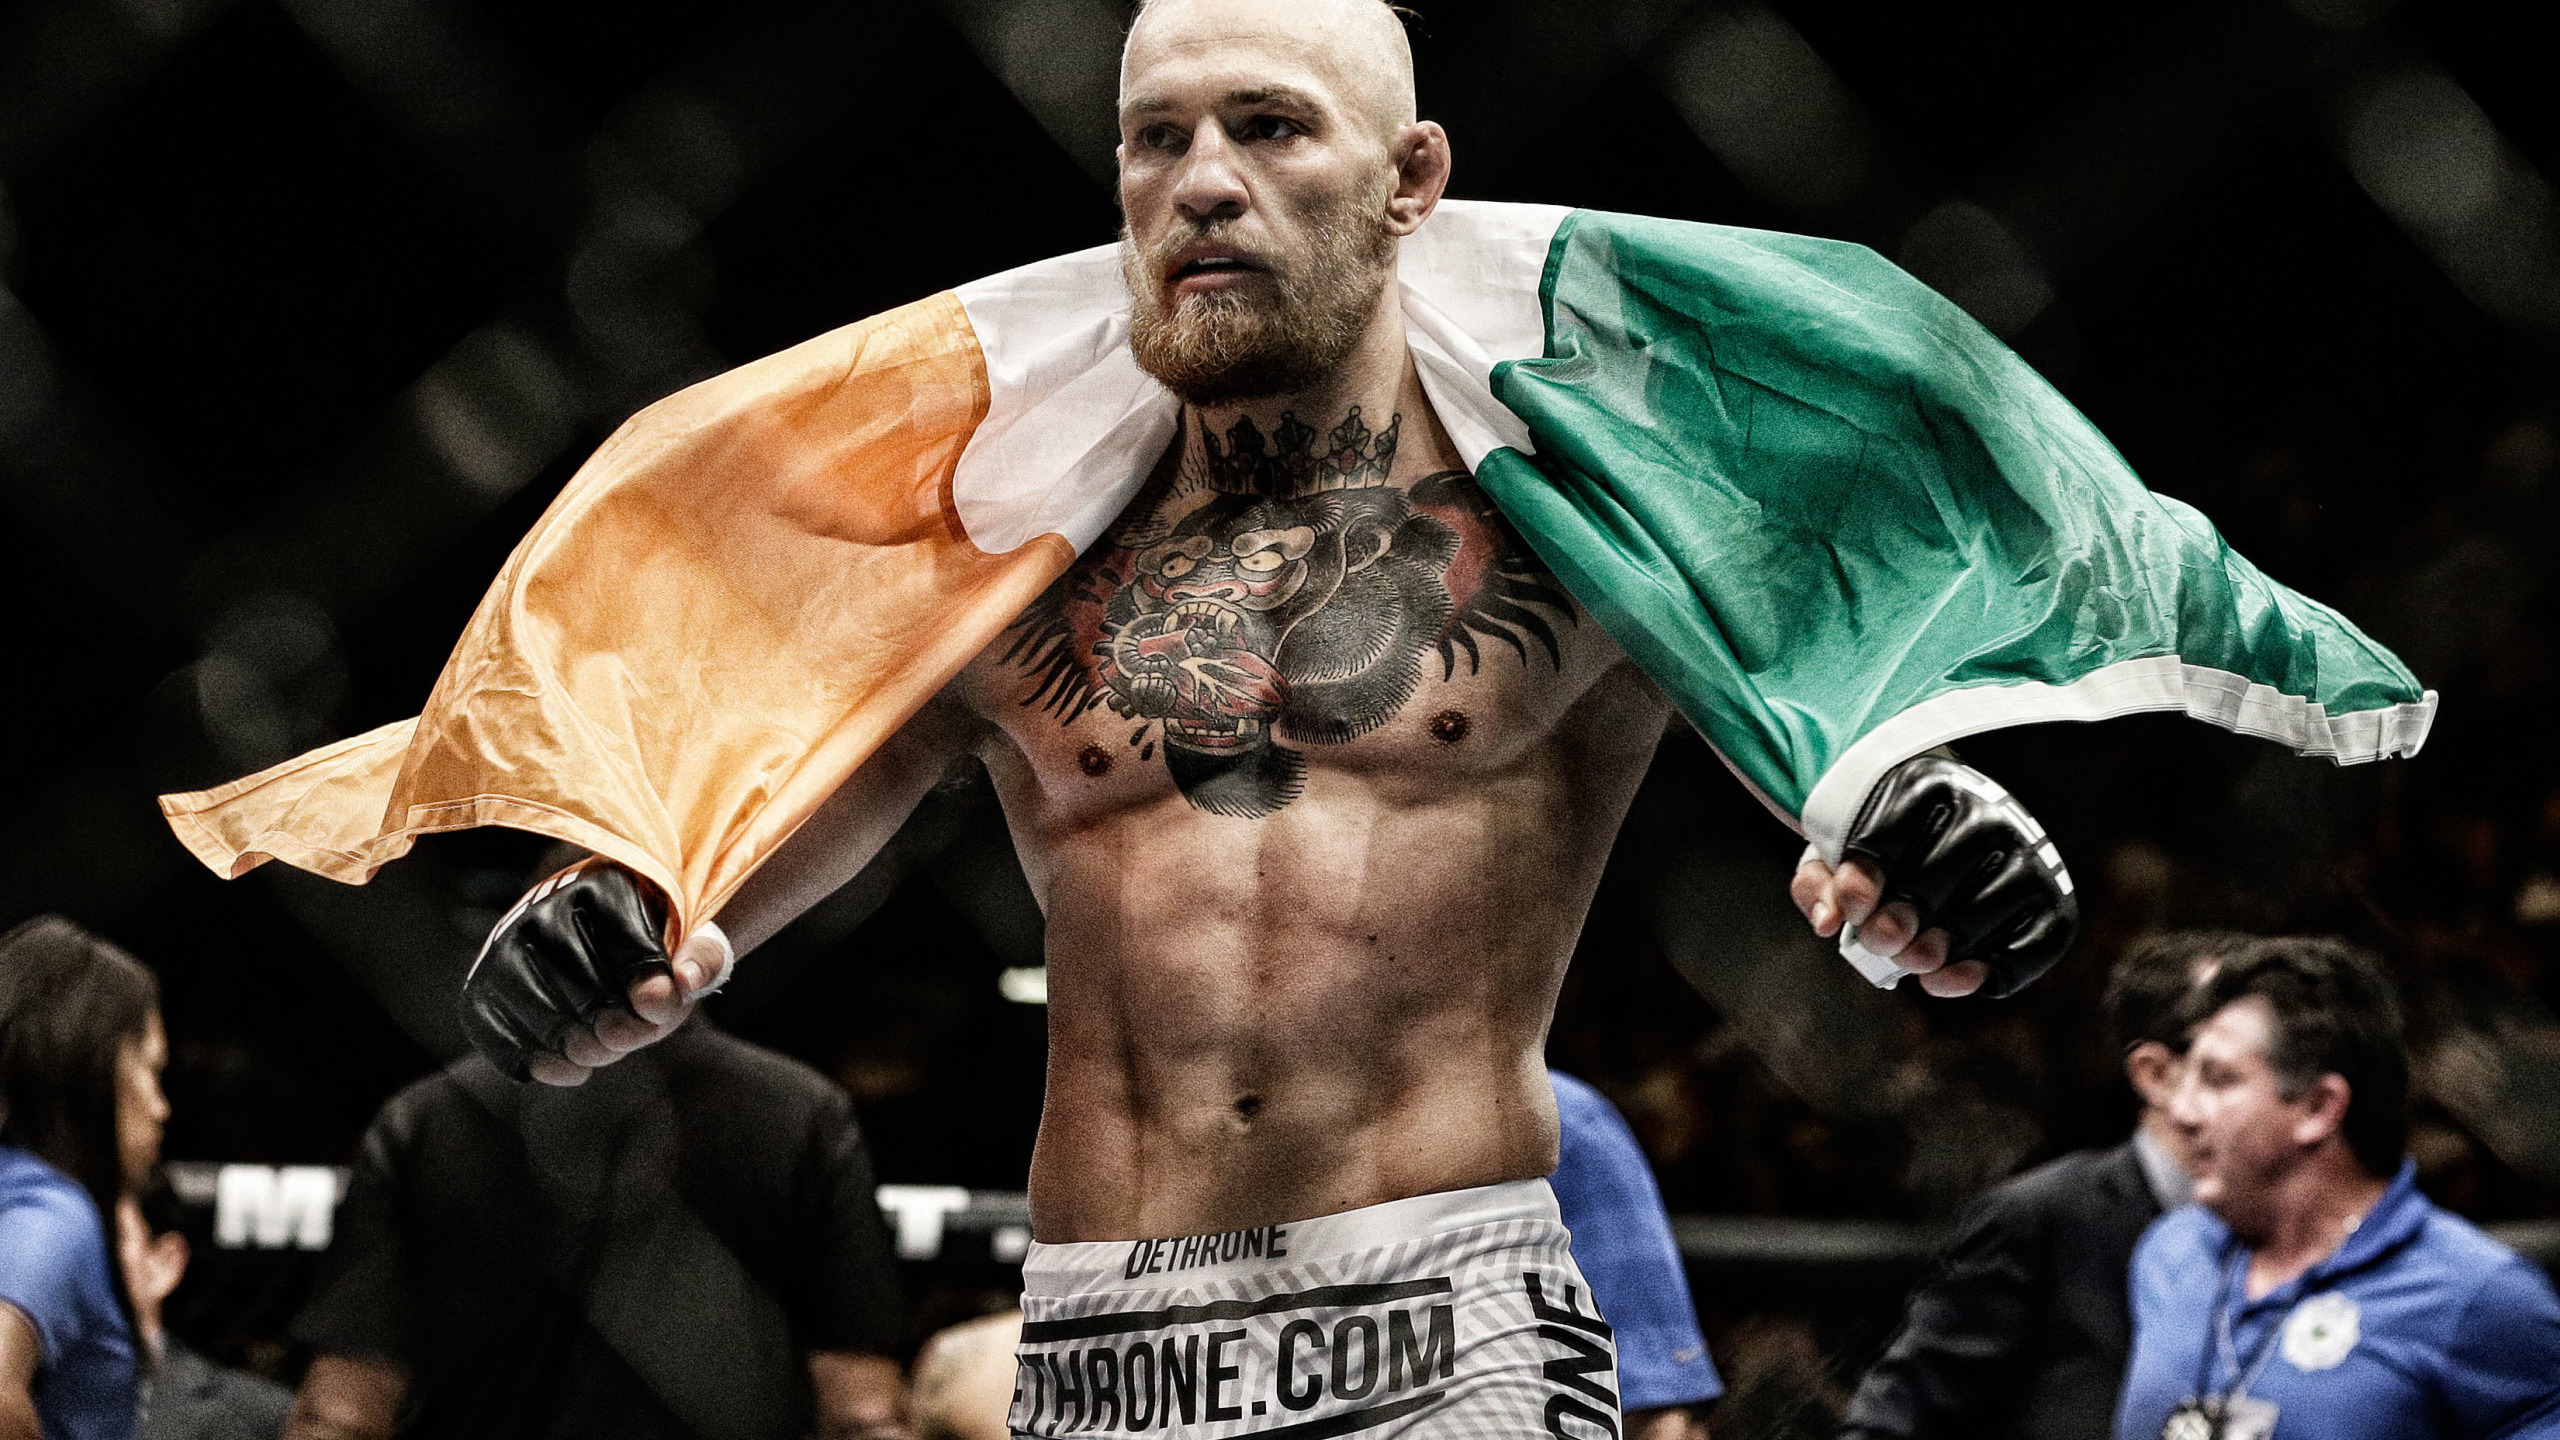 2560x1440 Download wallpaper UFC, Conor McGregor, Conor McGregor, section sports in resoluti